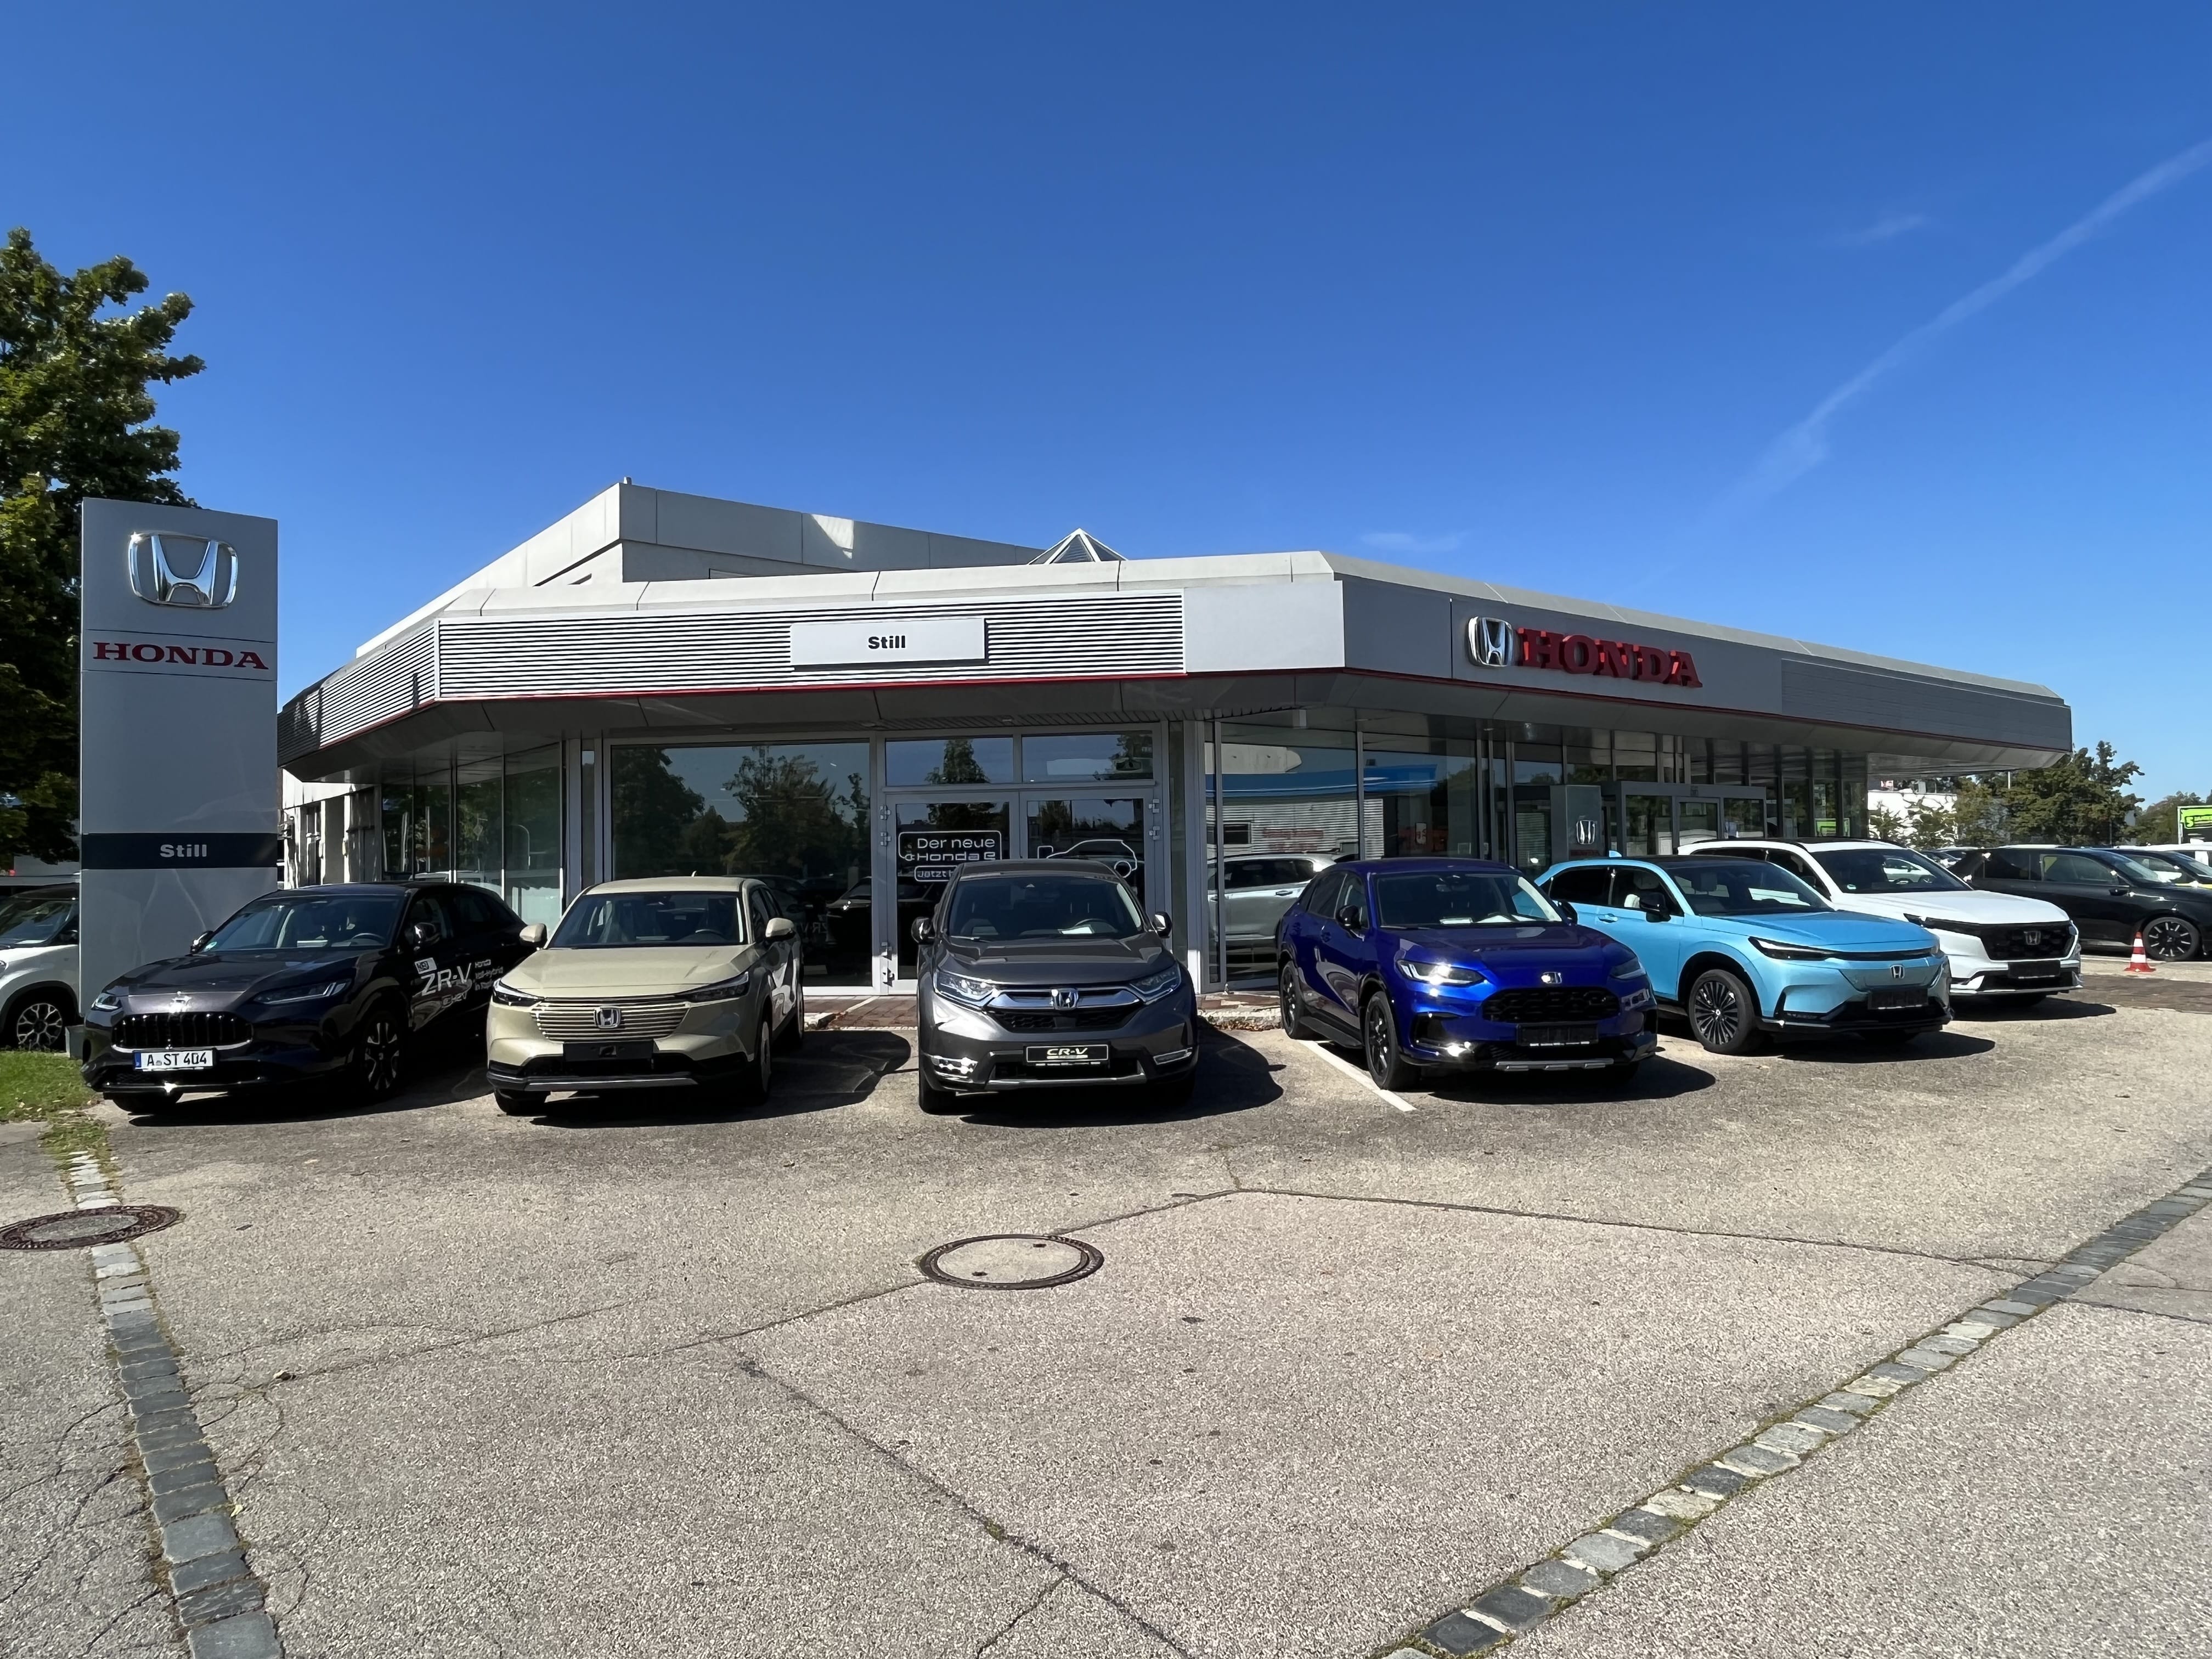 Honda Still Autohaus in Augsburg